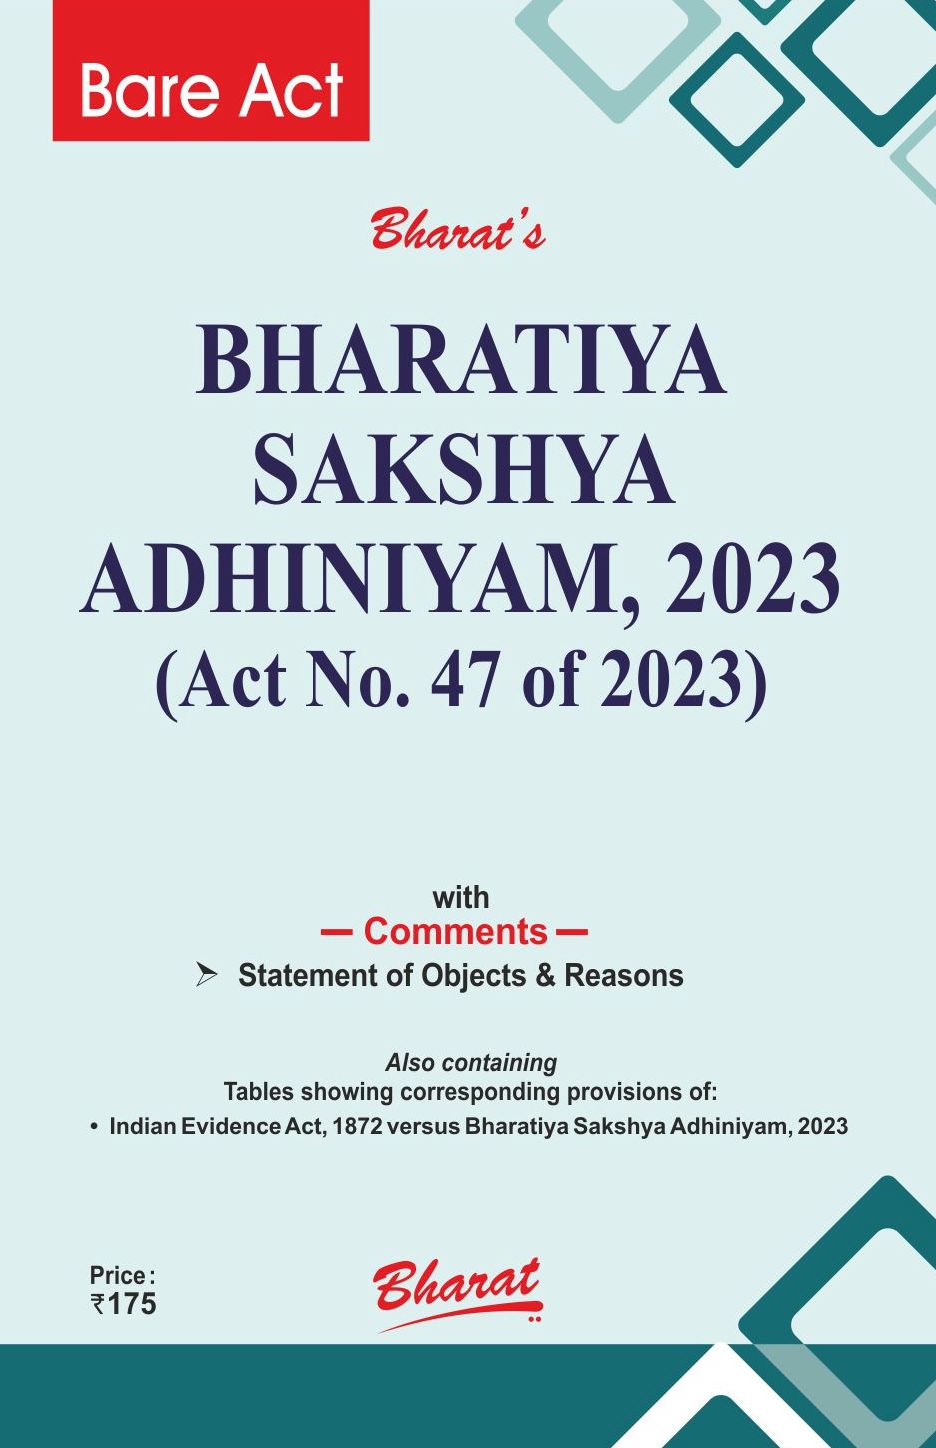 BHARATIYA SAKSHYA ADHINIYAM, 2023 (Act No. 47 of 2023)